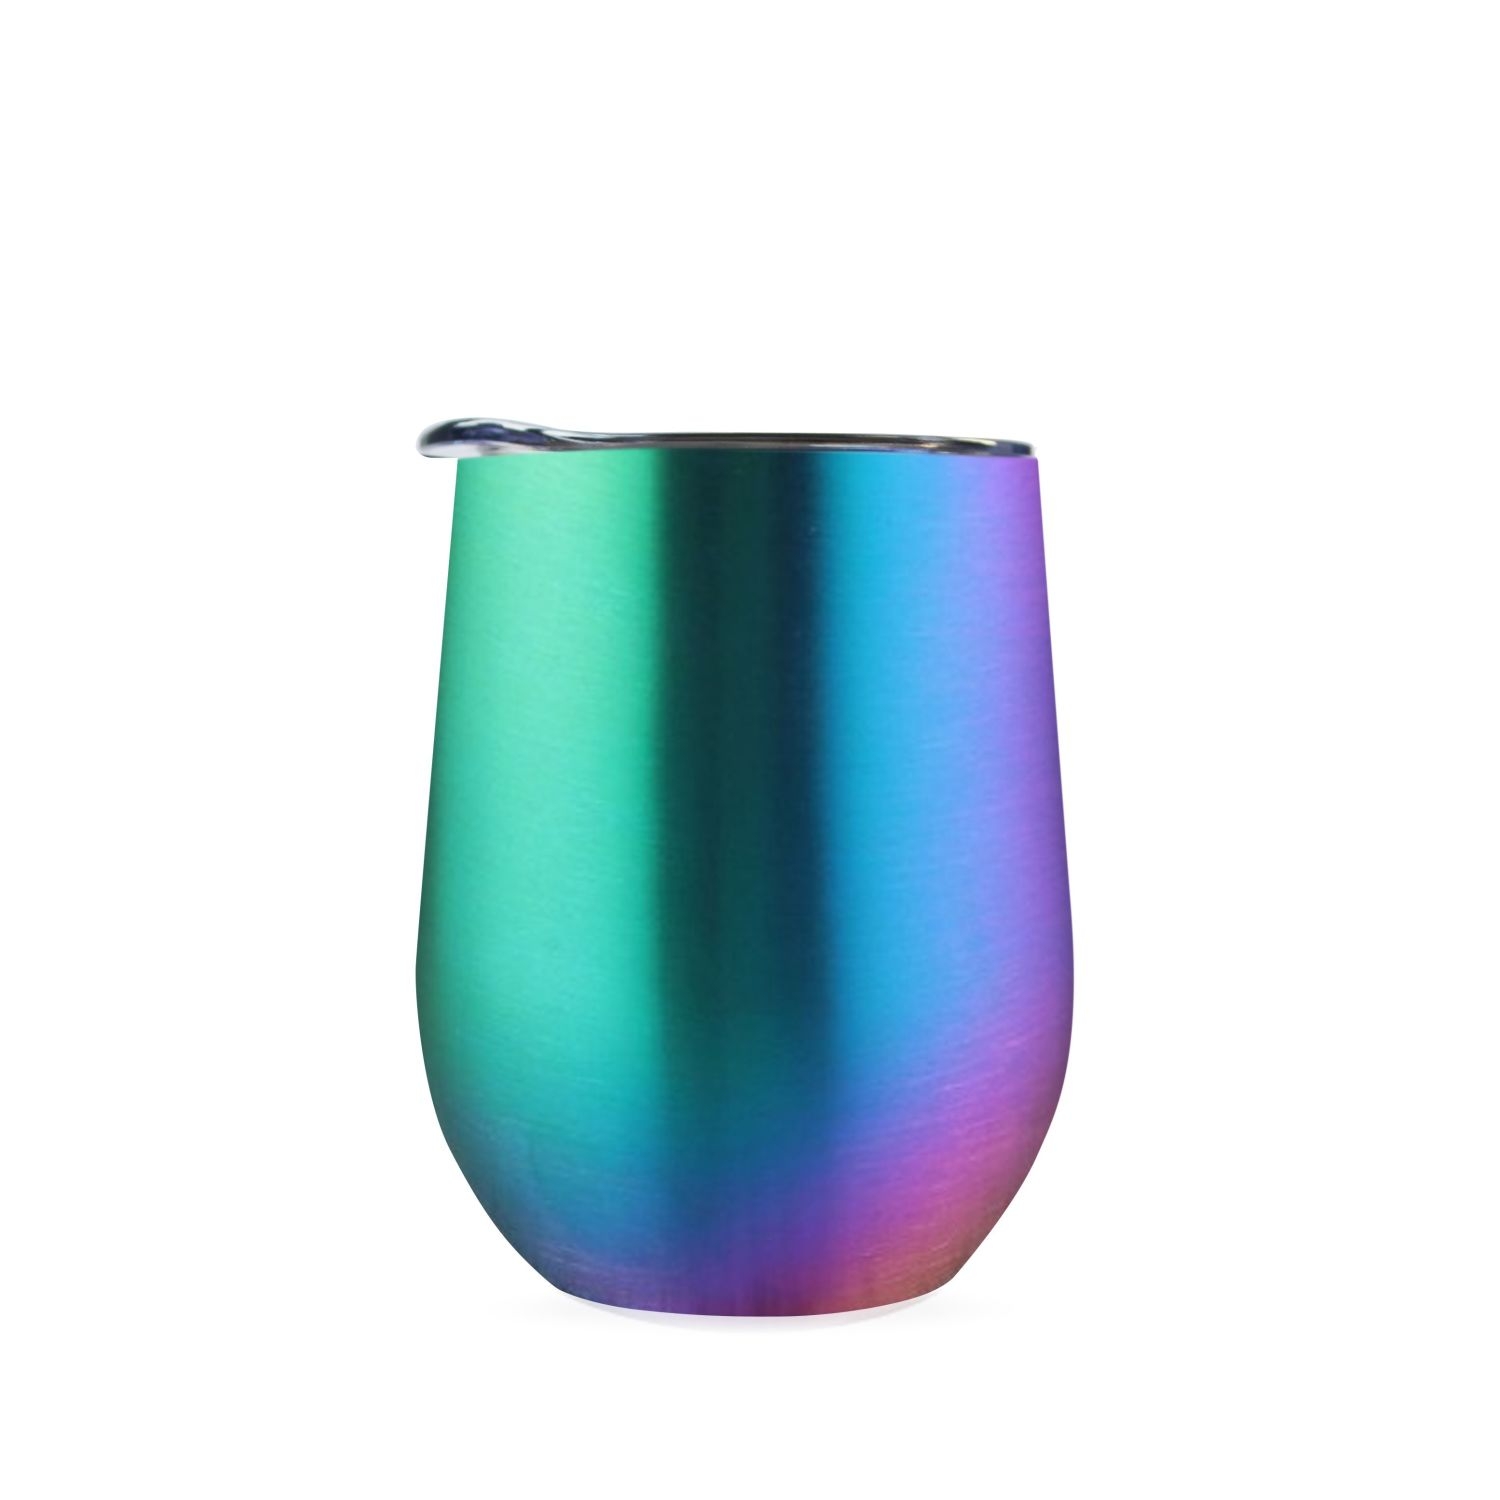 Набор Cofer Tube galvanic CO12 x grey (спектр), спектр, металл